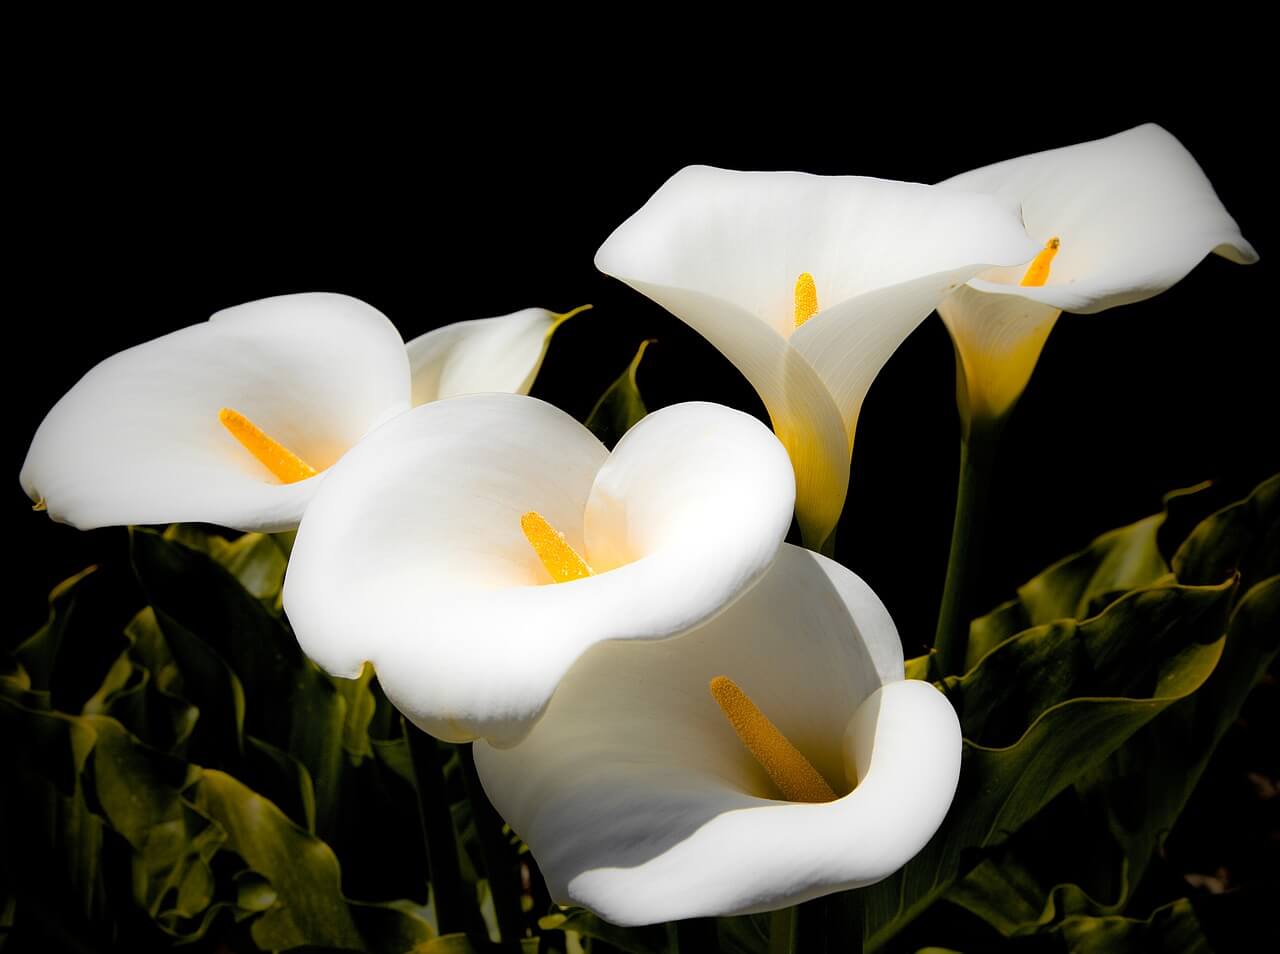 Calla lilies as anniversary gift